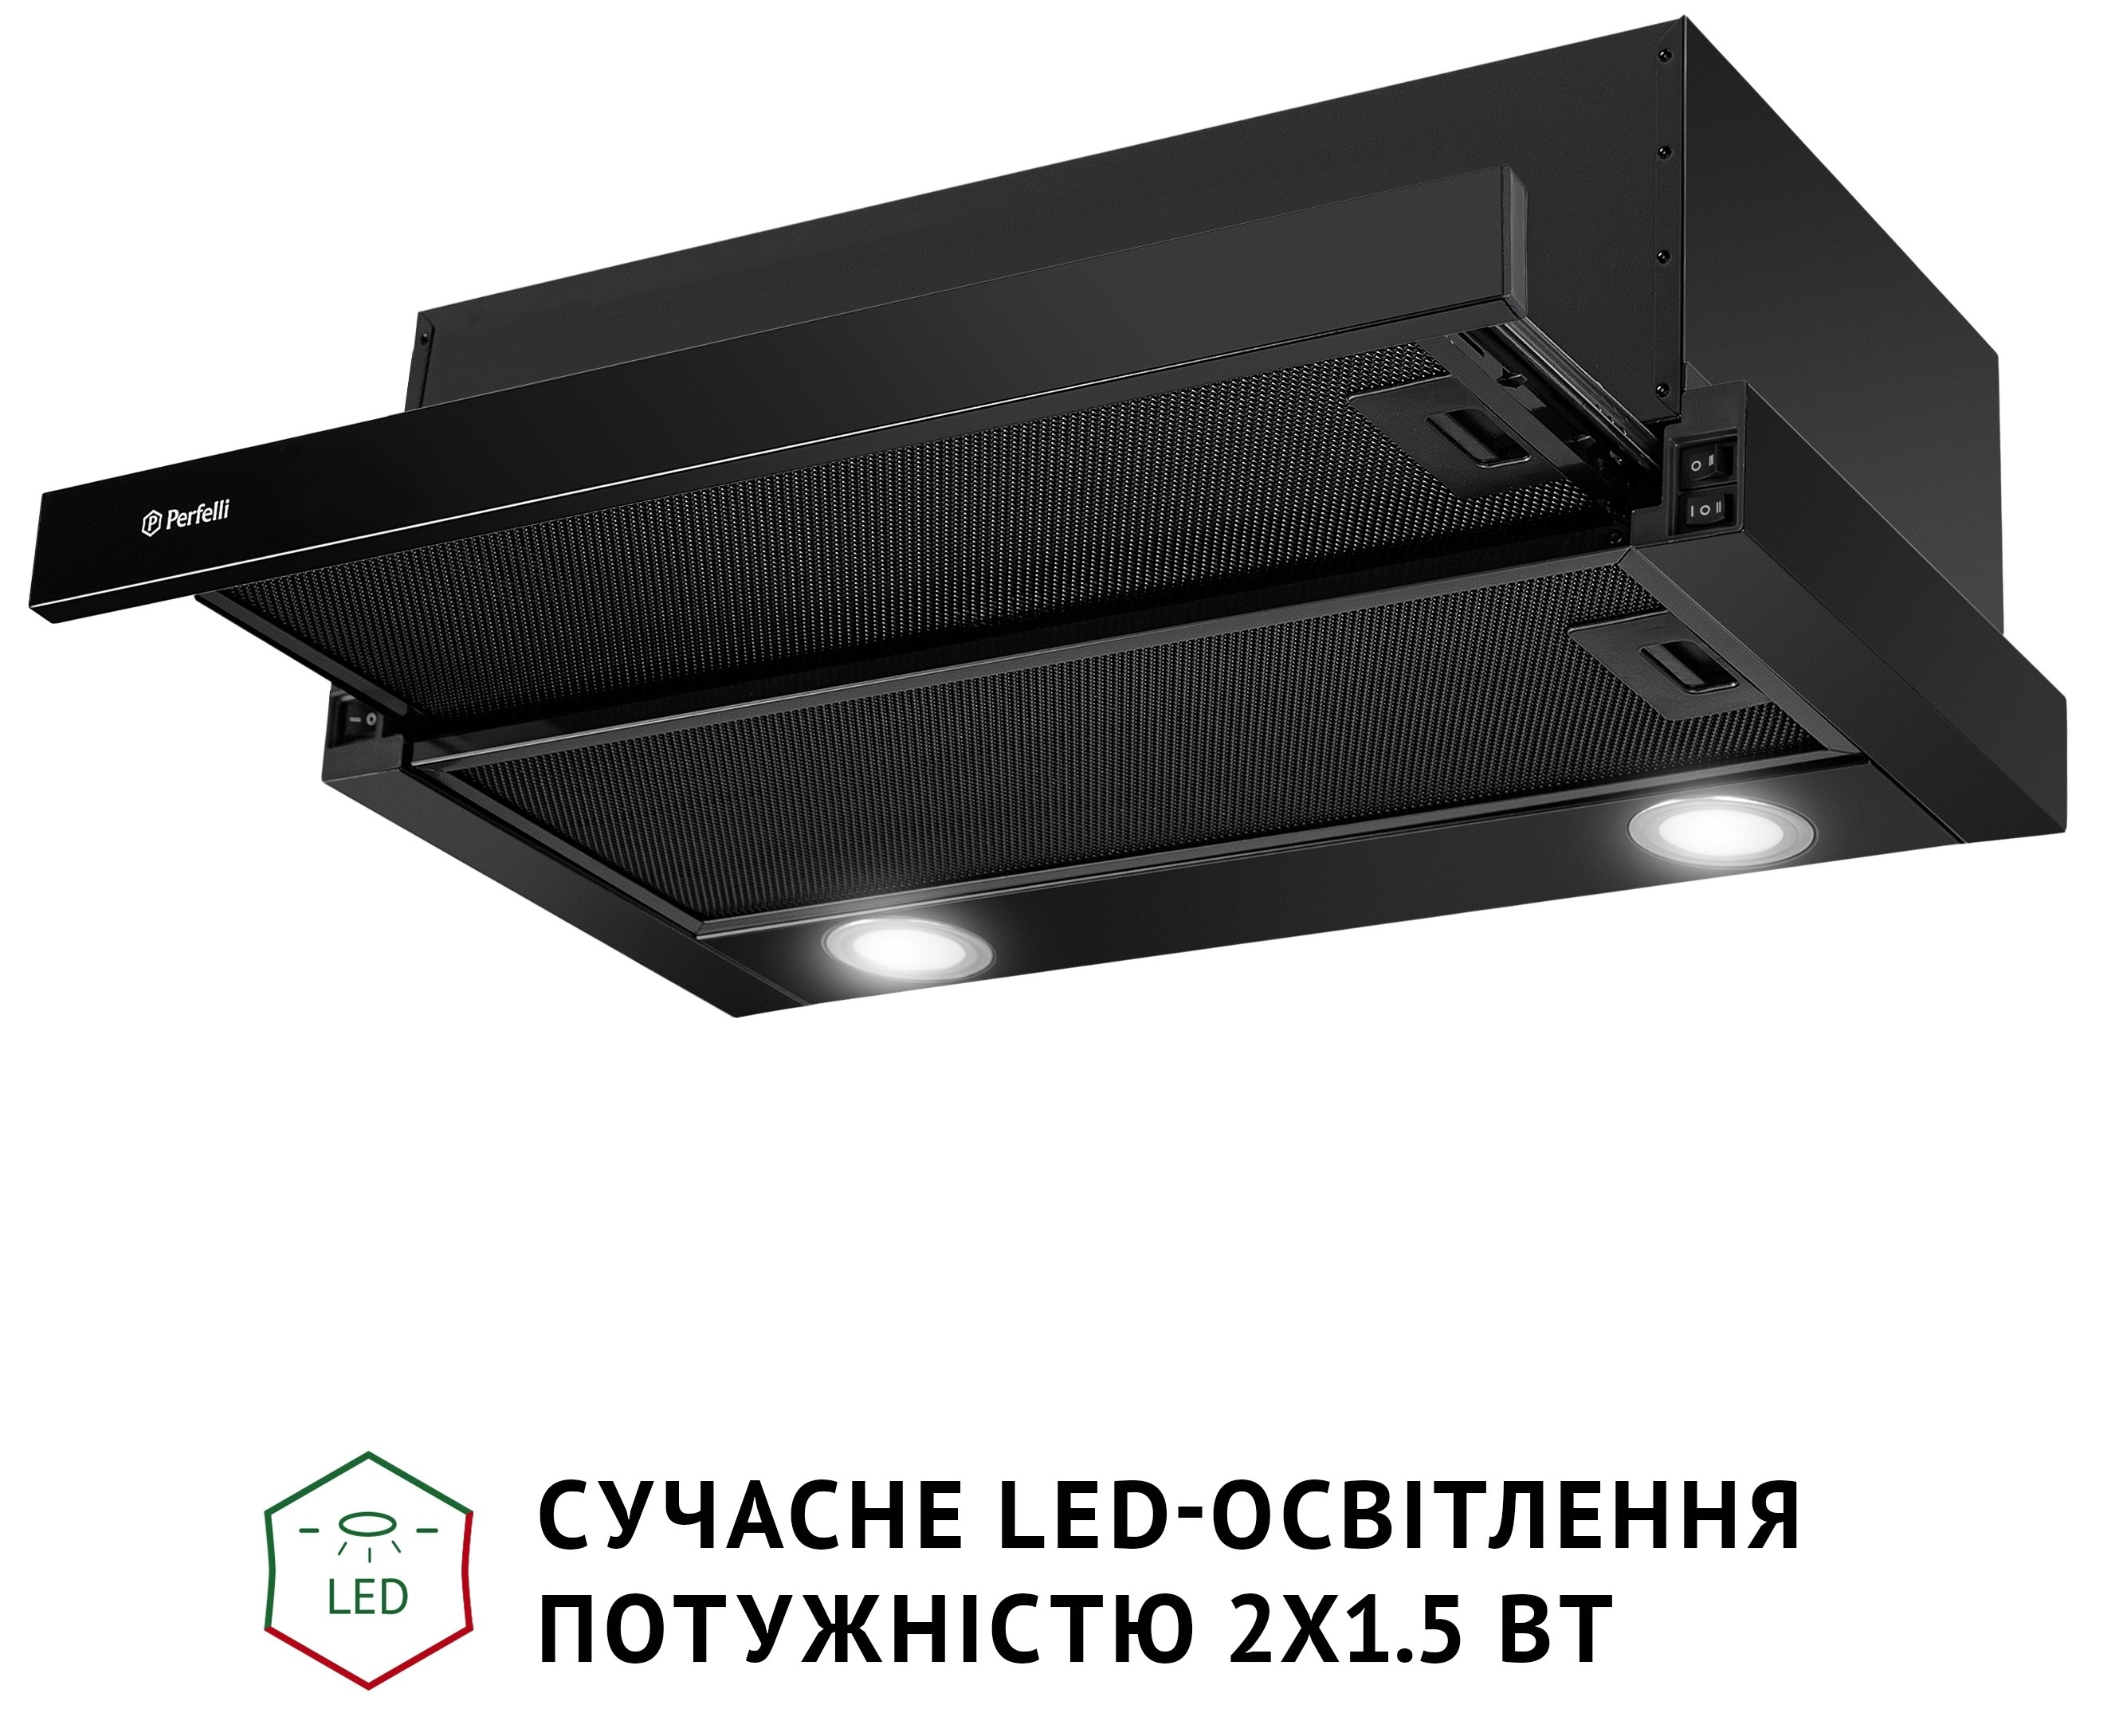 продаём Perfelli TL 6622 Full BL 1000 LED в Украине - фото 4